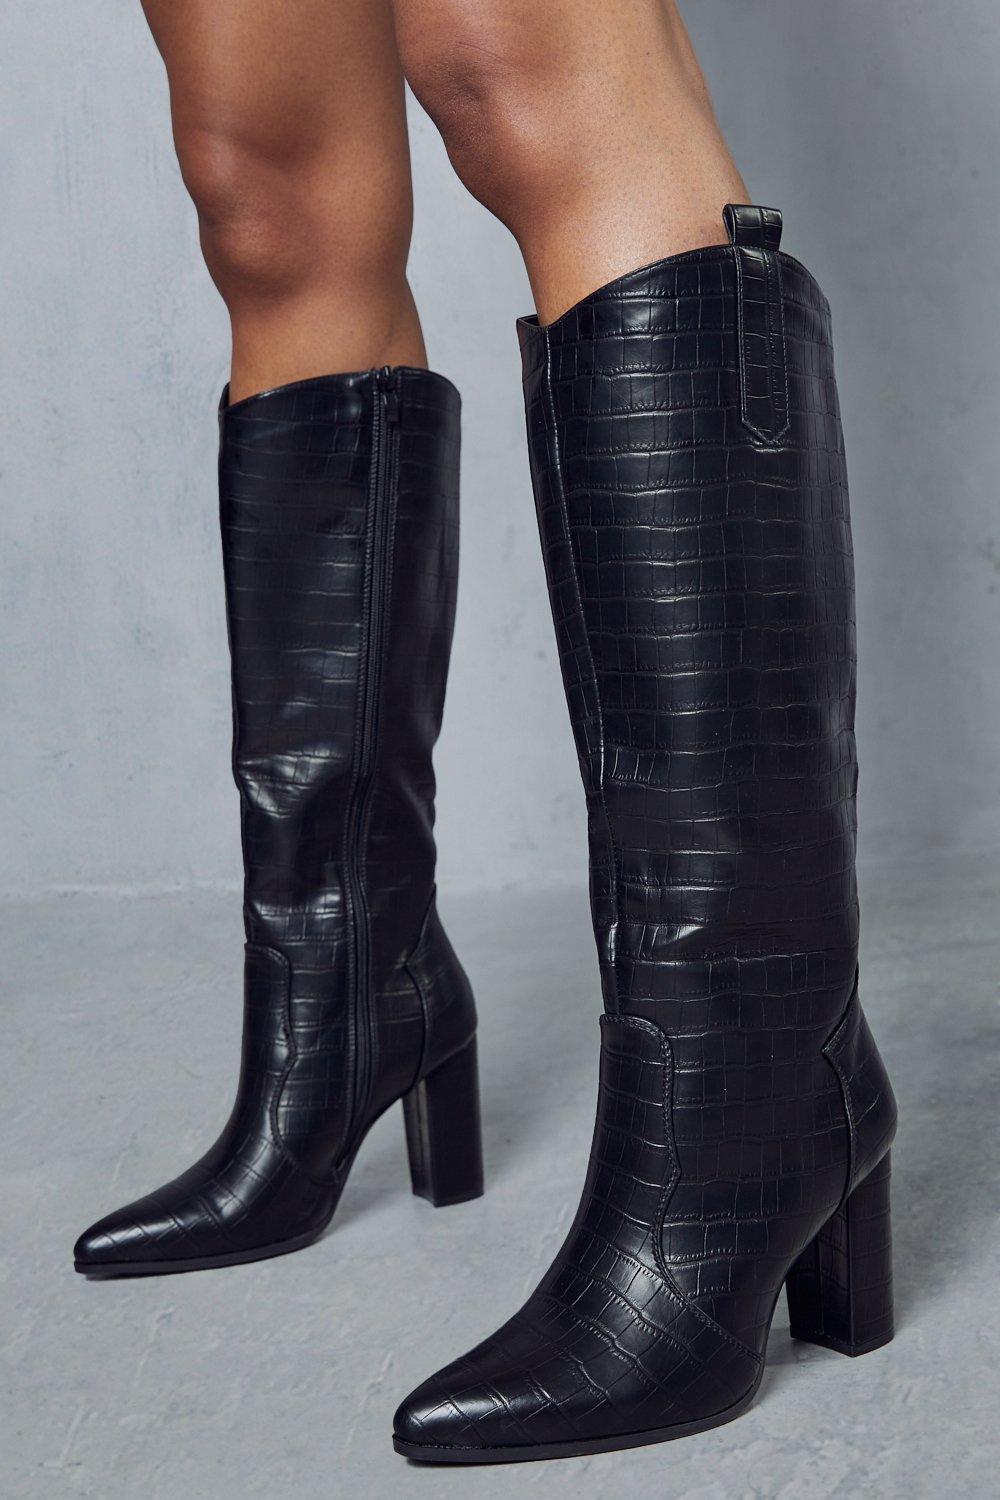 womens croc knee high western boots - black - 8, black